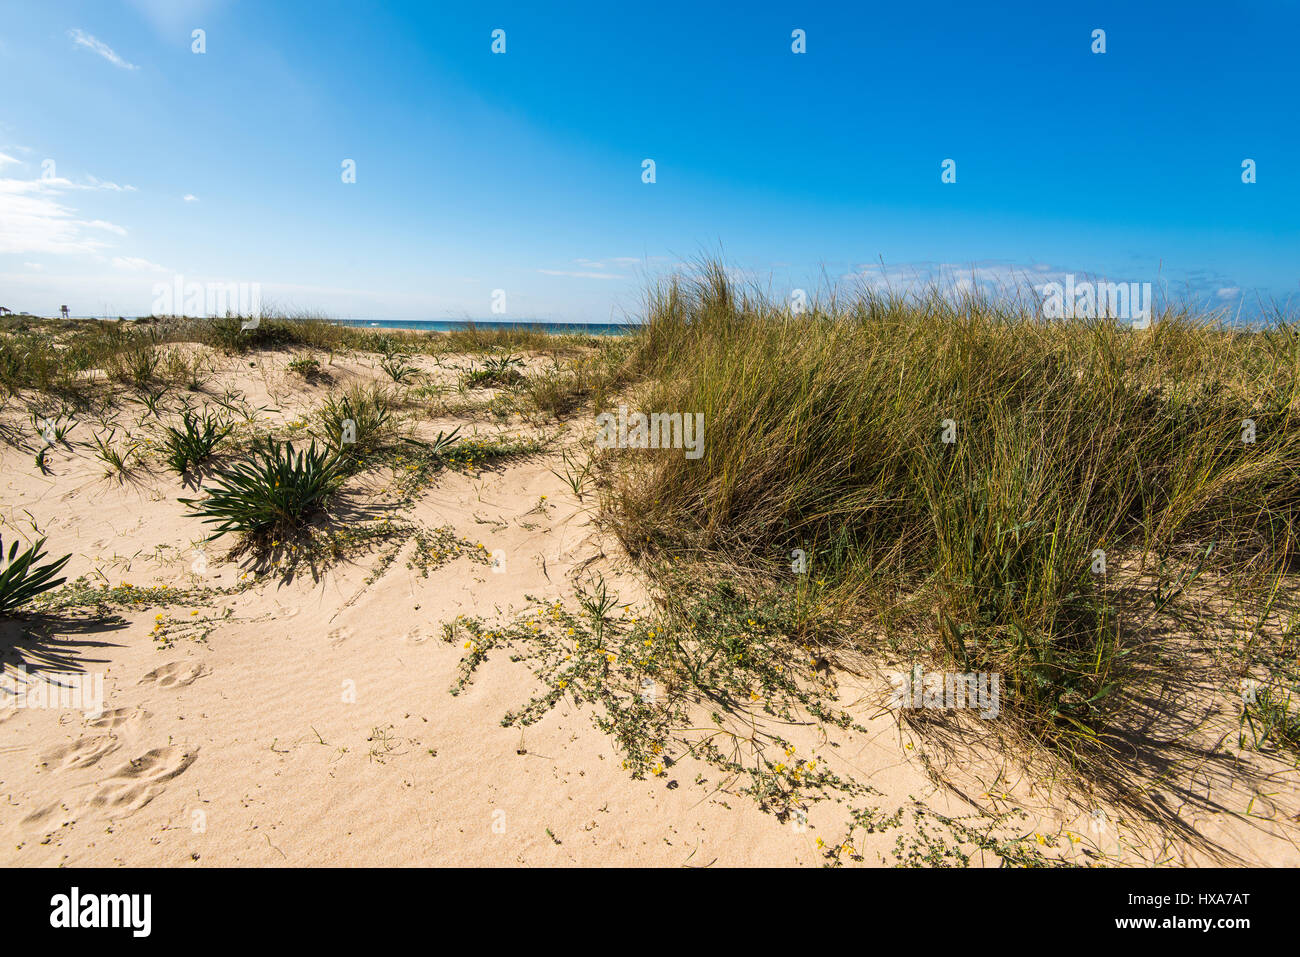 Dunes in Zahara de los Atunes natural reserve, Spain Stock Photo